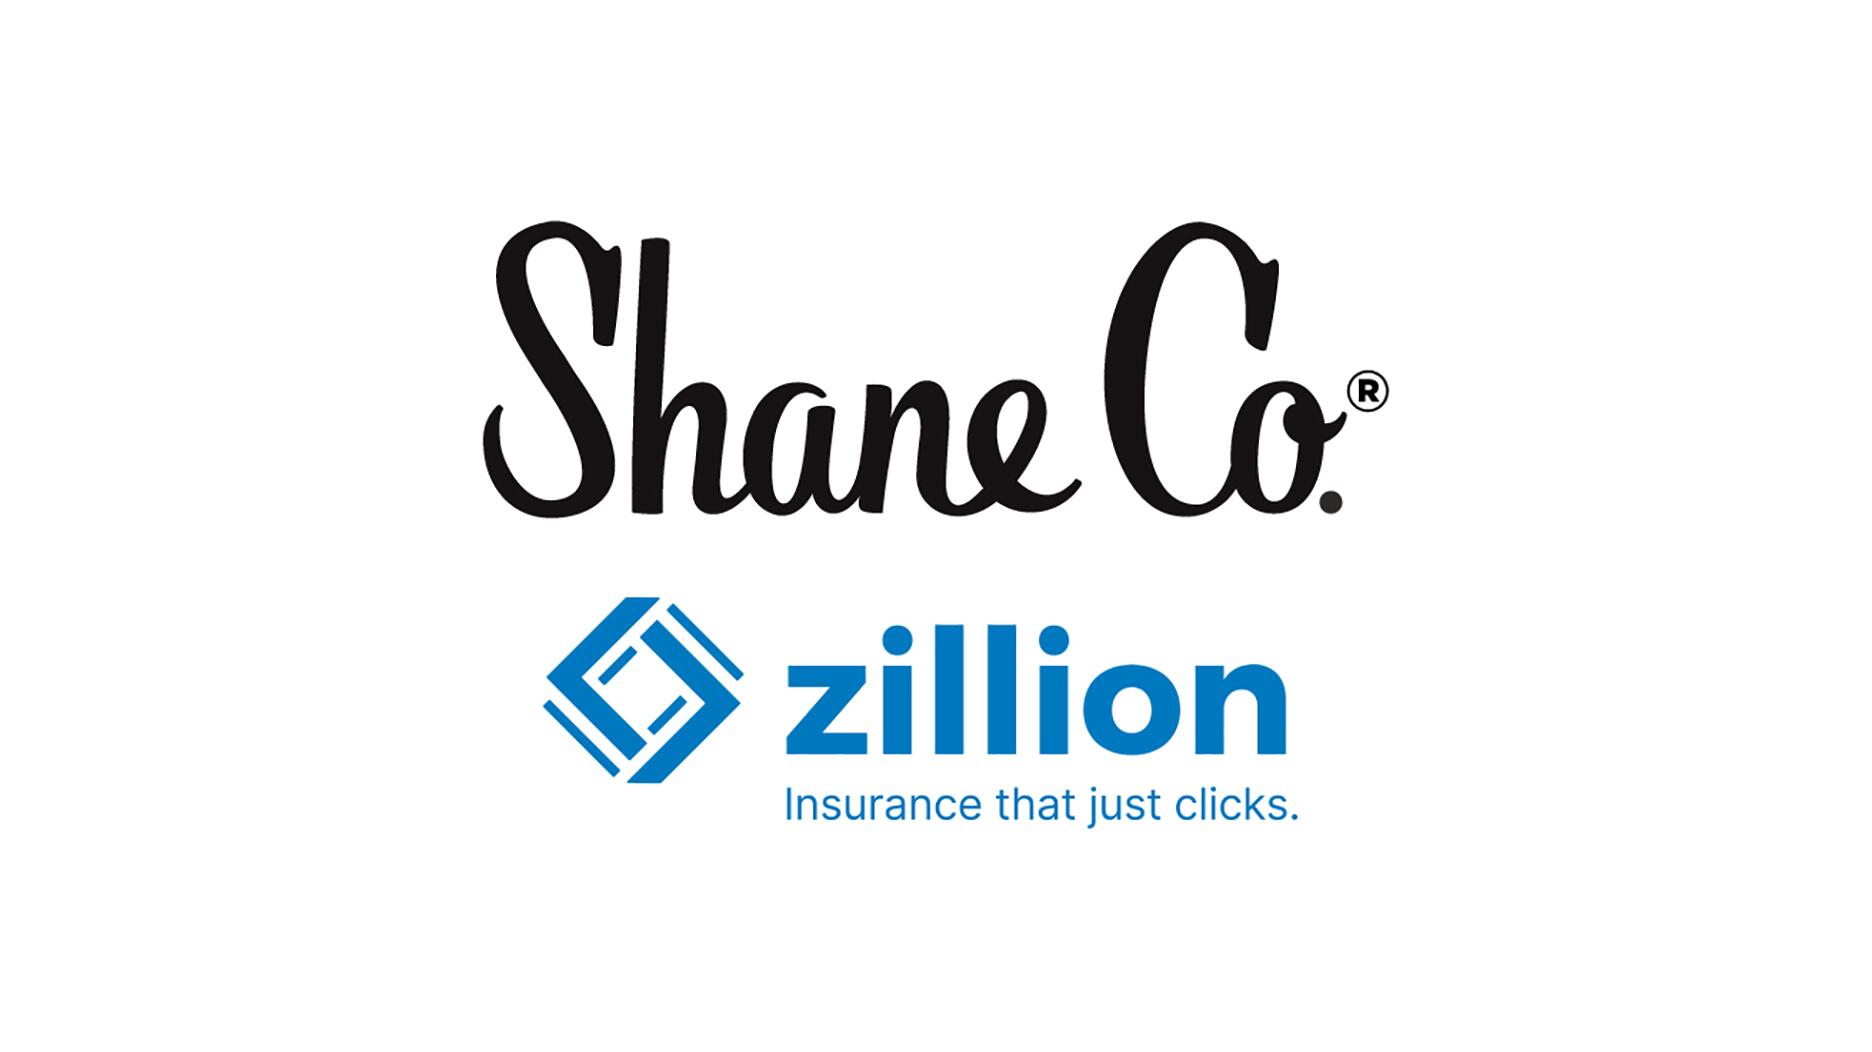 Zillion Shane Co. logo